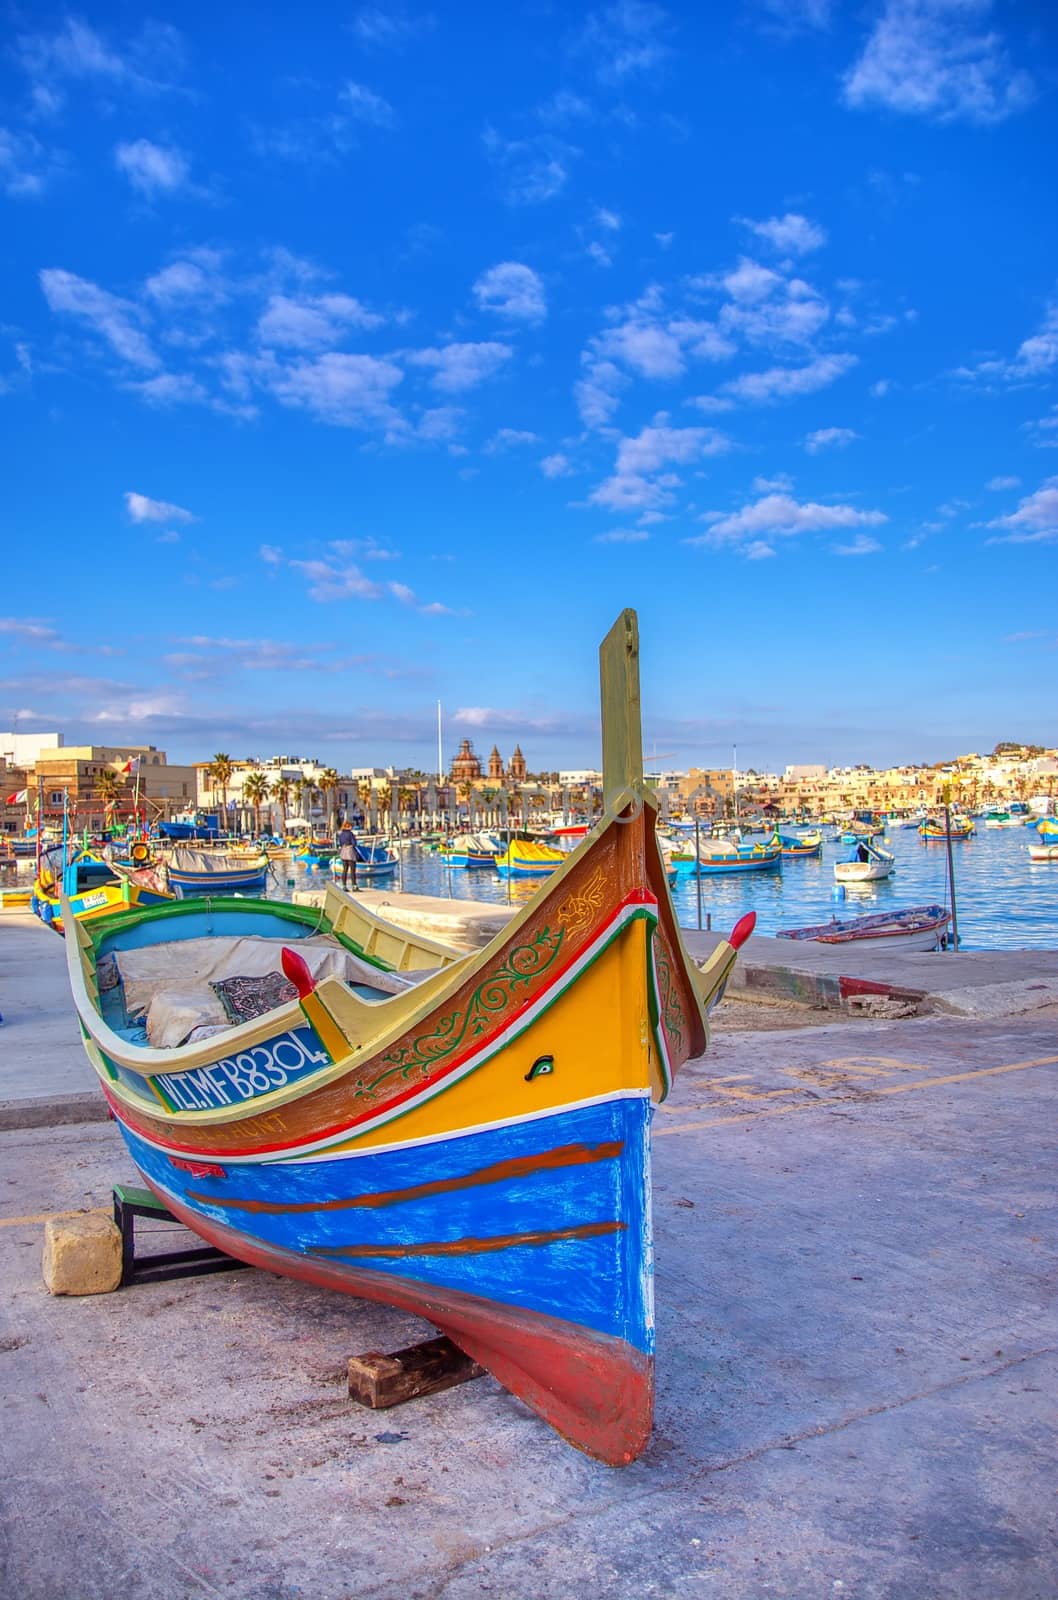 Marsaxlokk, Malta - January 10, 2020: Beautiful view of the traditional eyed colorful boats Luzzu in the Harbor of Mediterranean fishing village Marsaxlokk, Malta